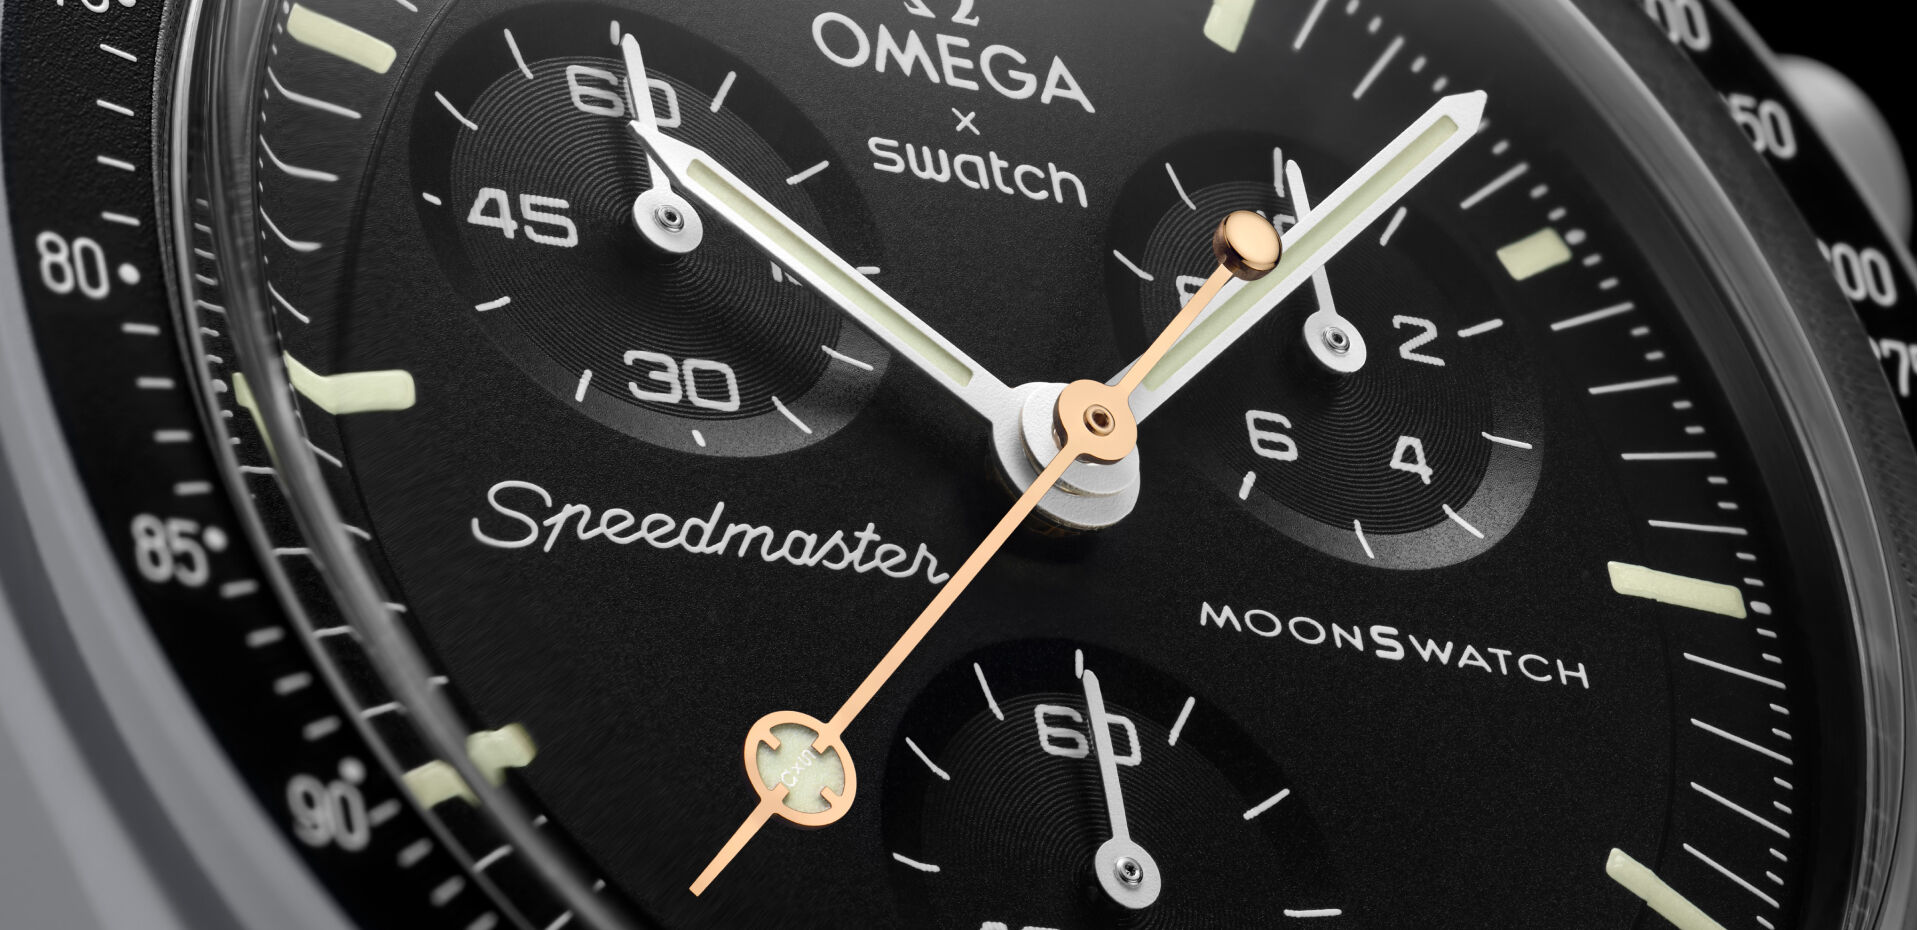 Swatch Omega オメガ スウォッチ ムーン シャインゴールドゴールド - 時計